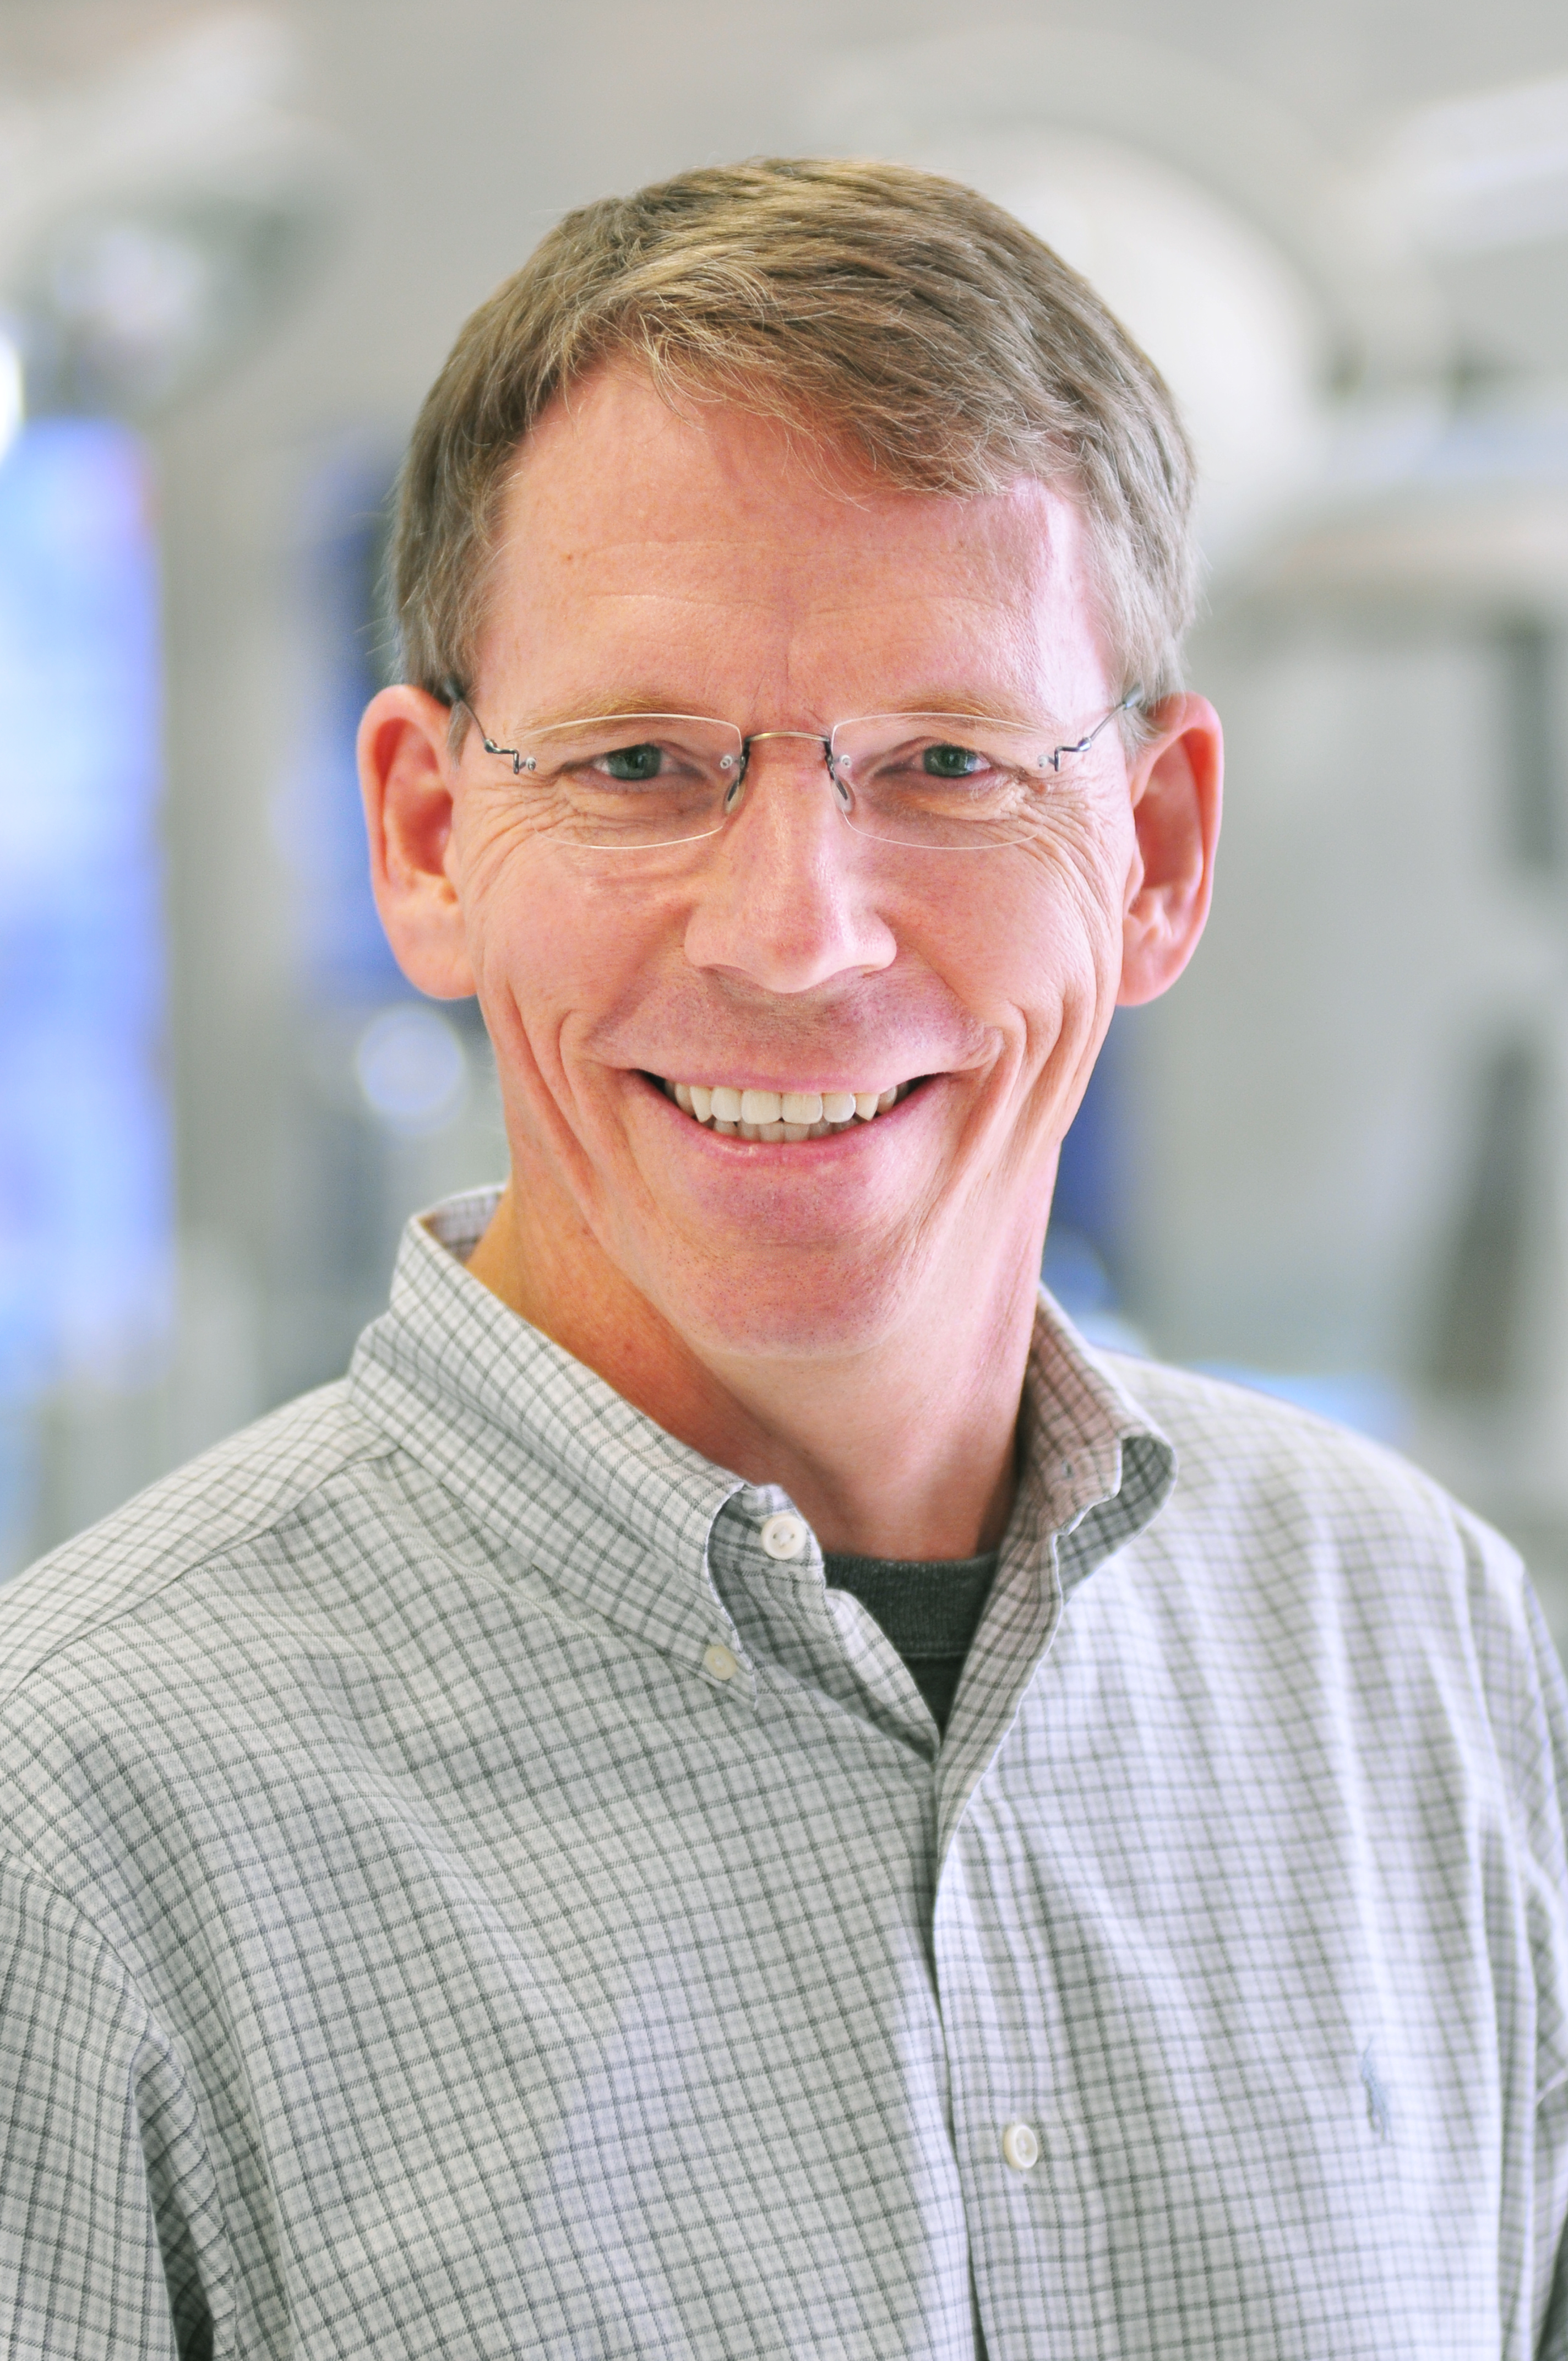 Dr. Thomas Cooper, the S. Donald Greenberg professor of Pathology & Immunology at Baylor College of Medicine